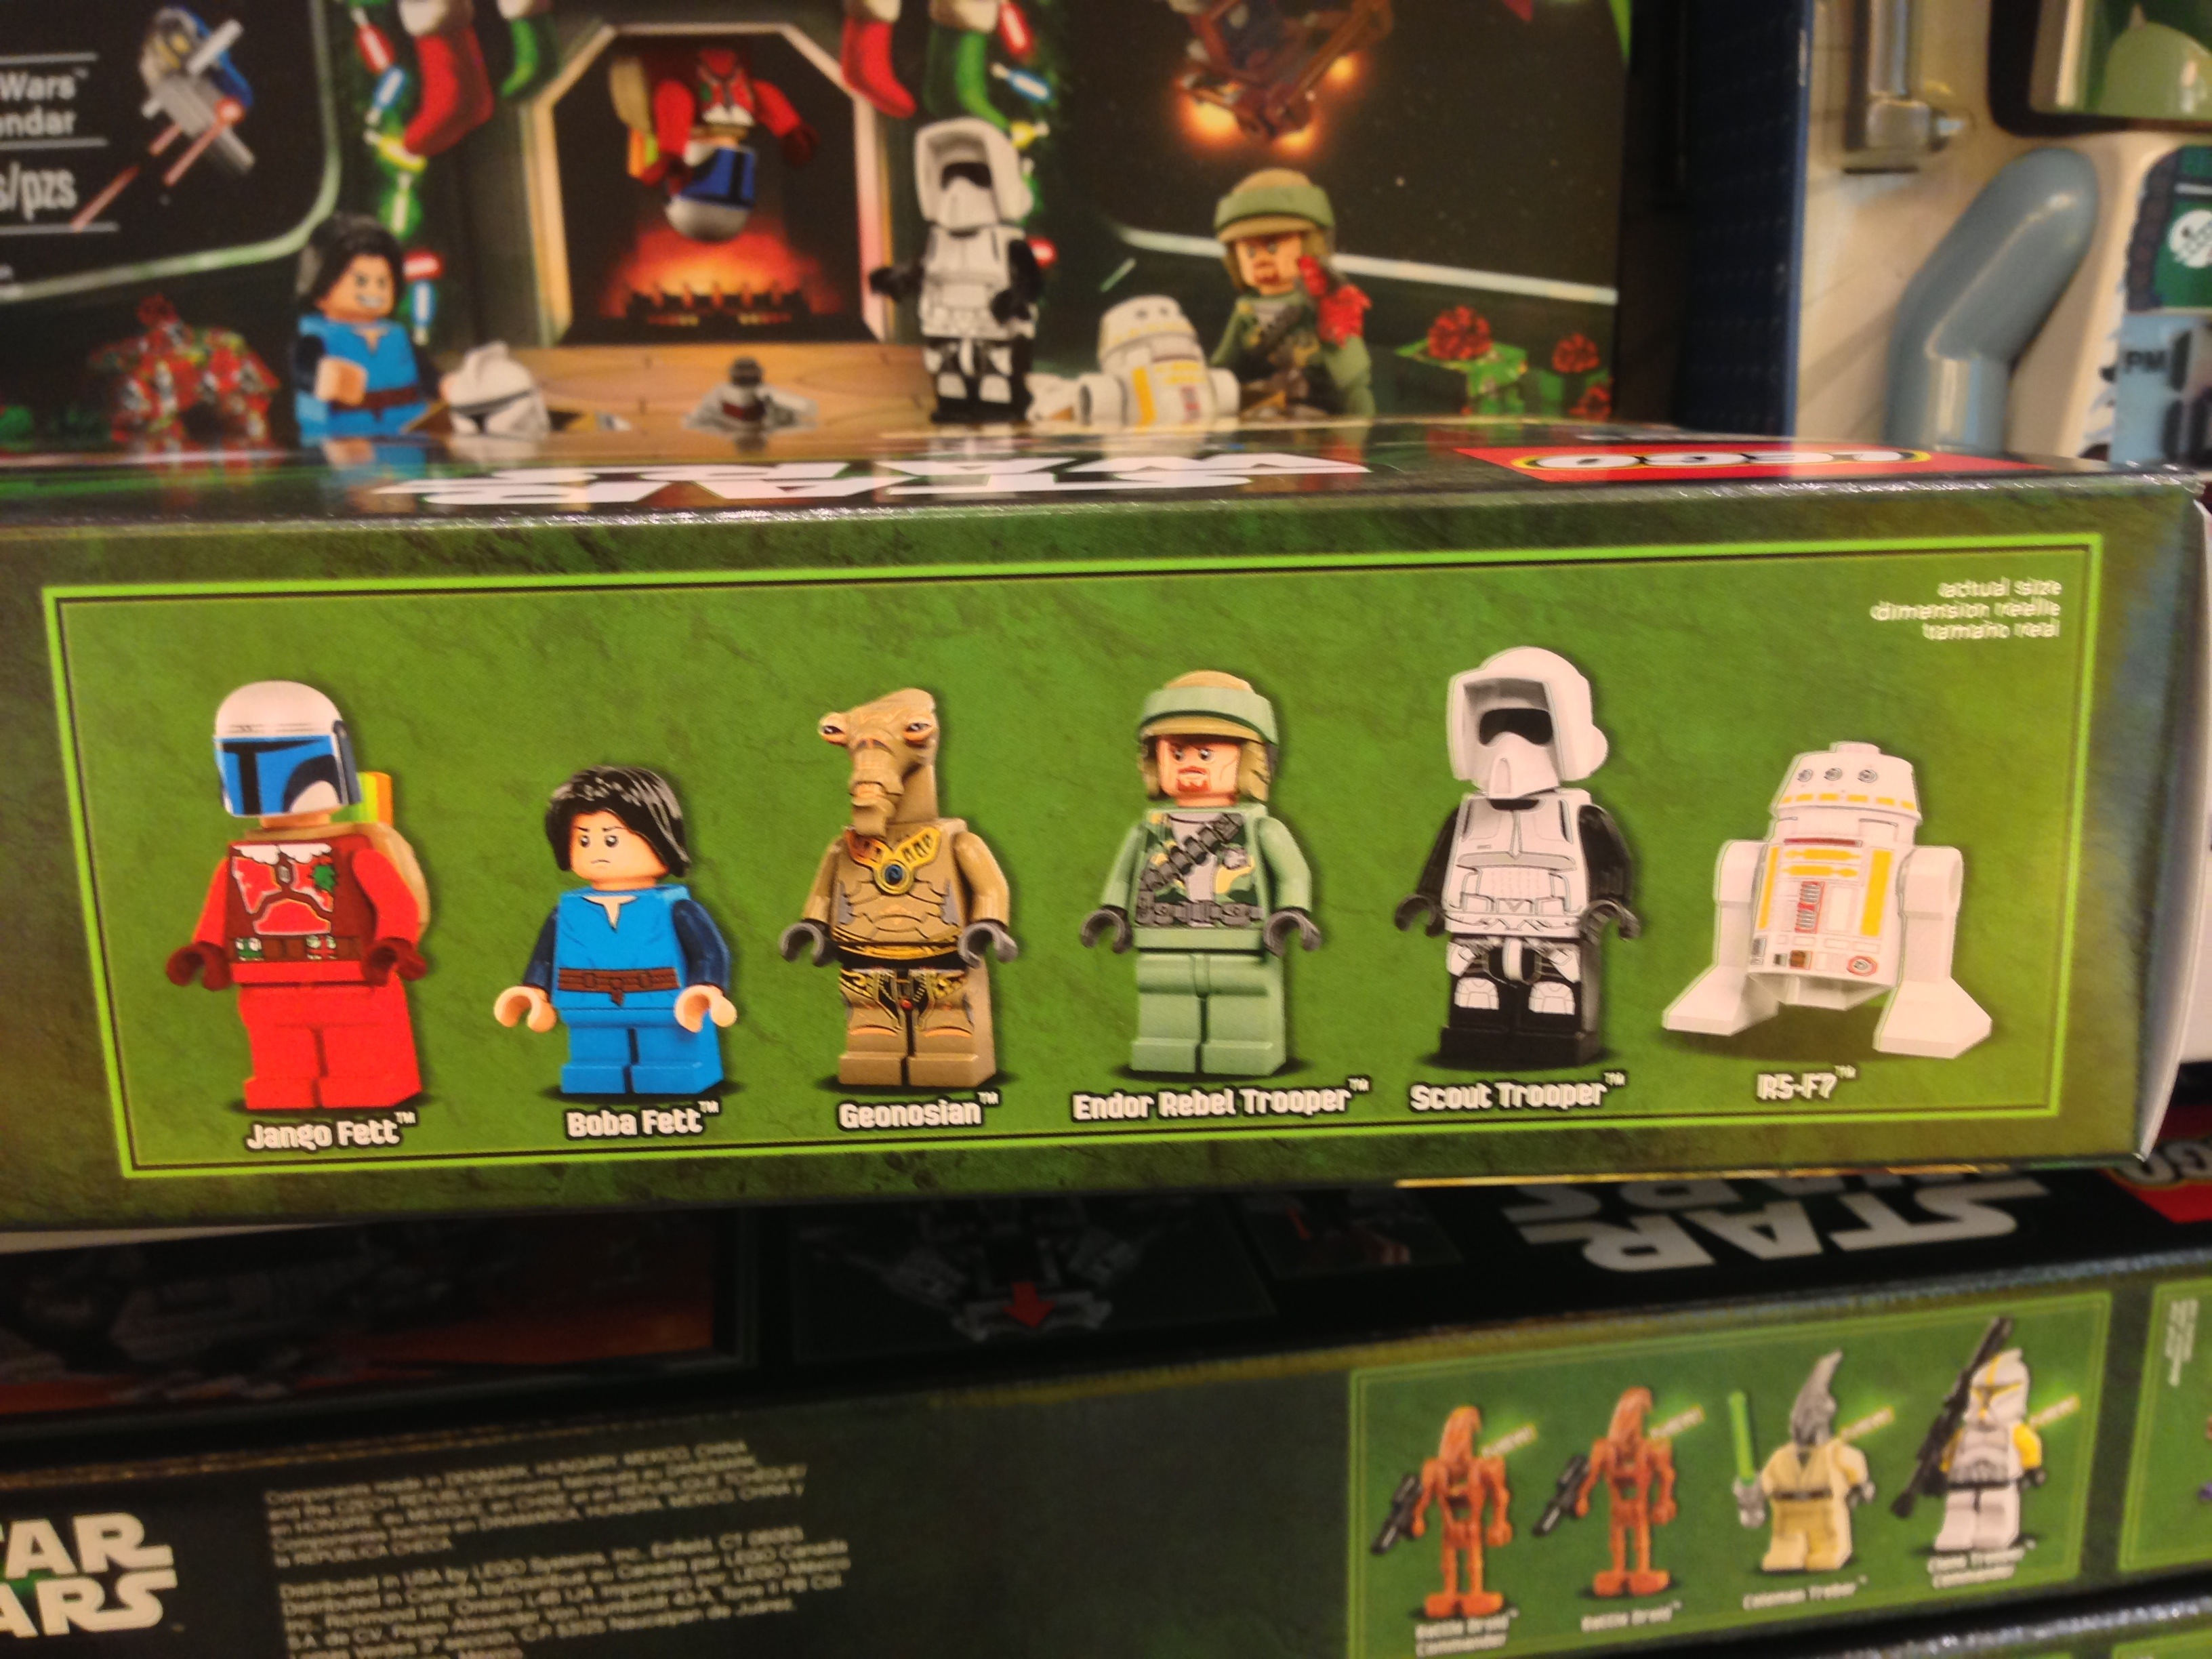 2013 LEGO Star Wars Advent Calendar 75023 Released in Stores! Bricks